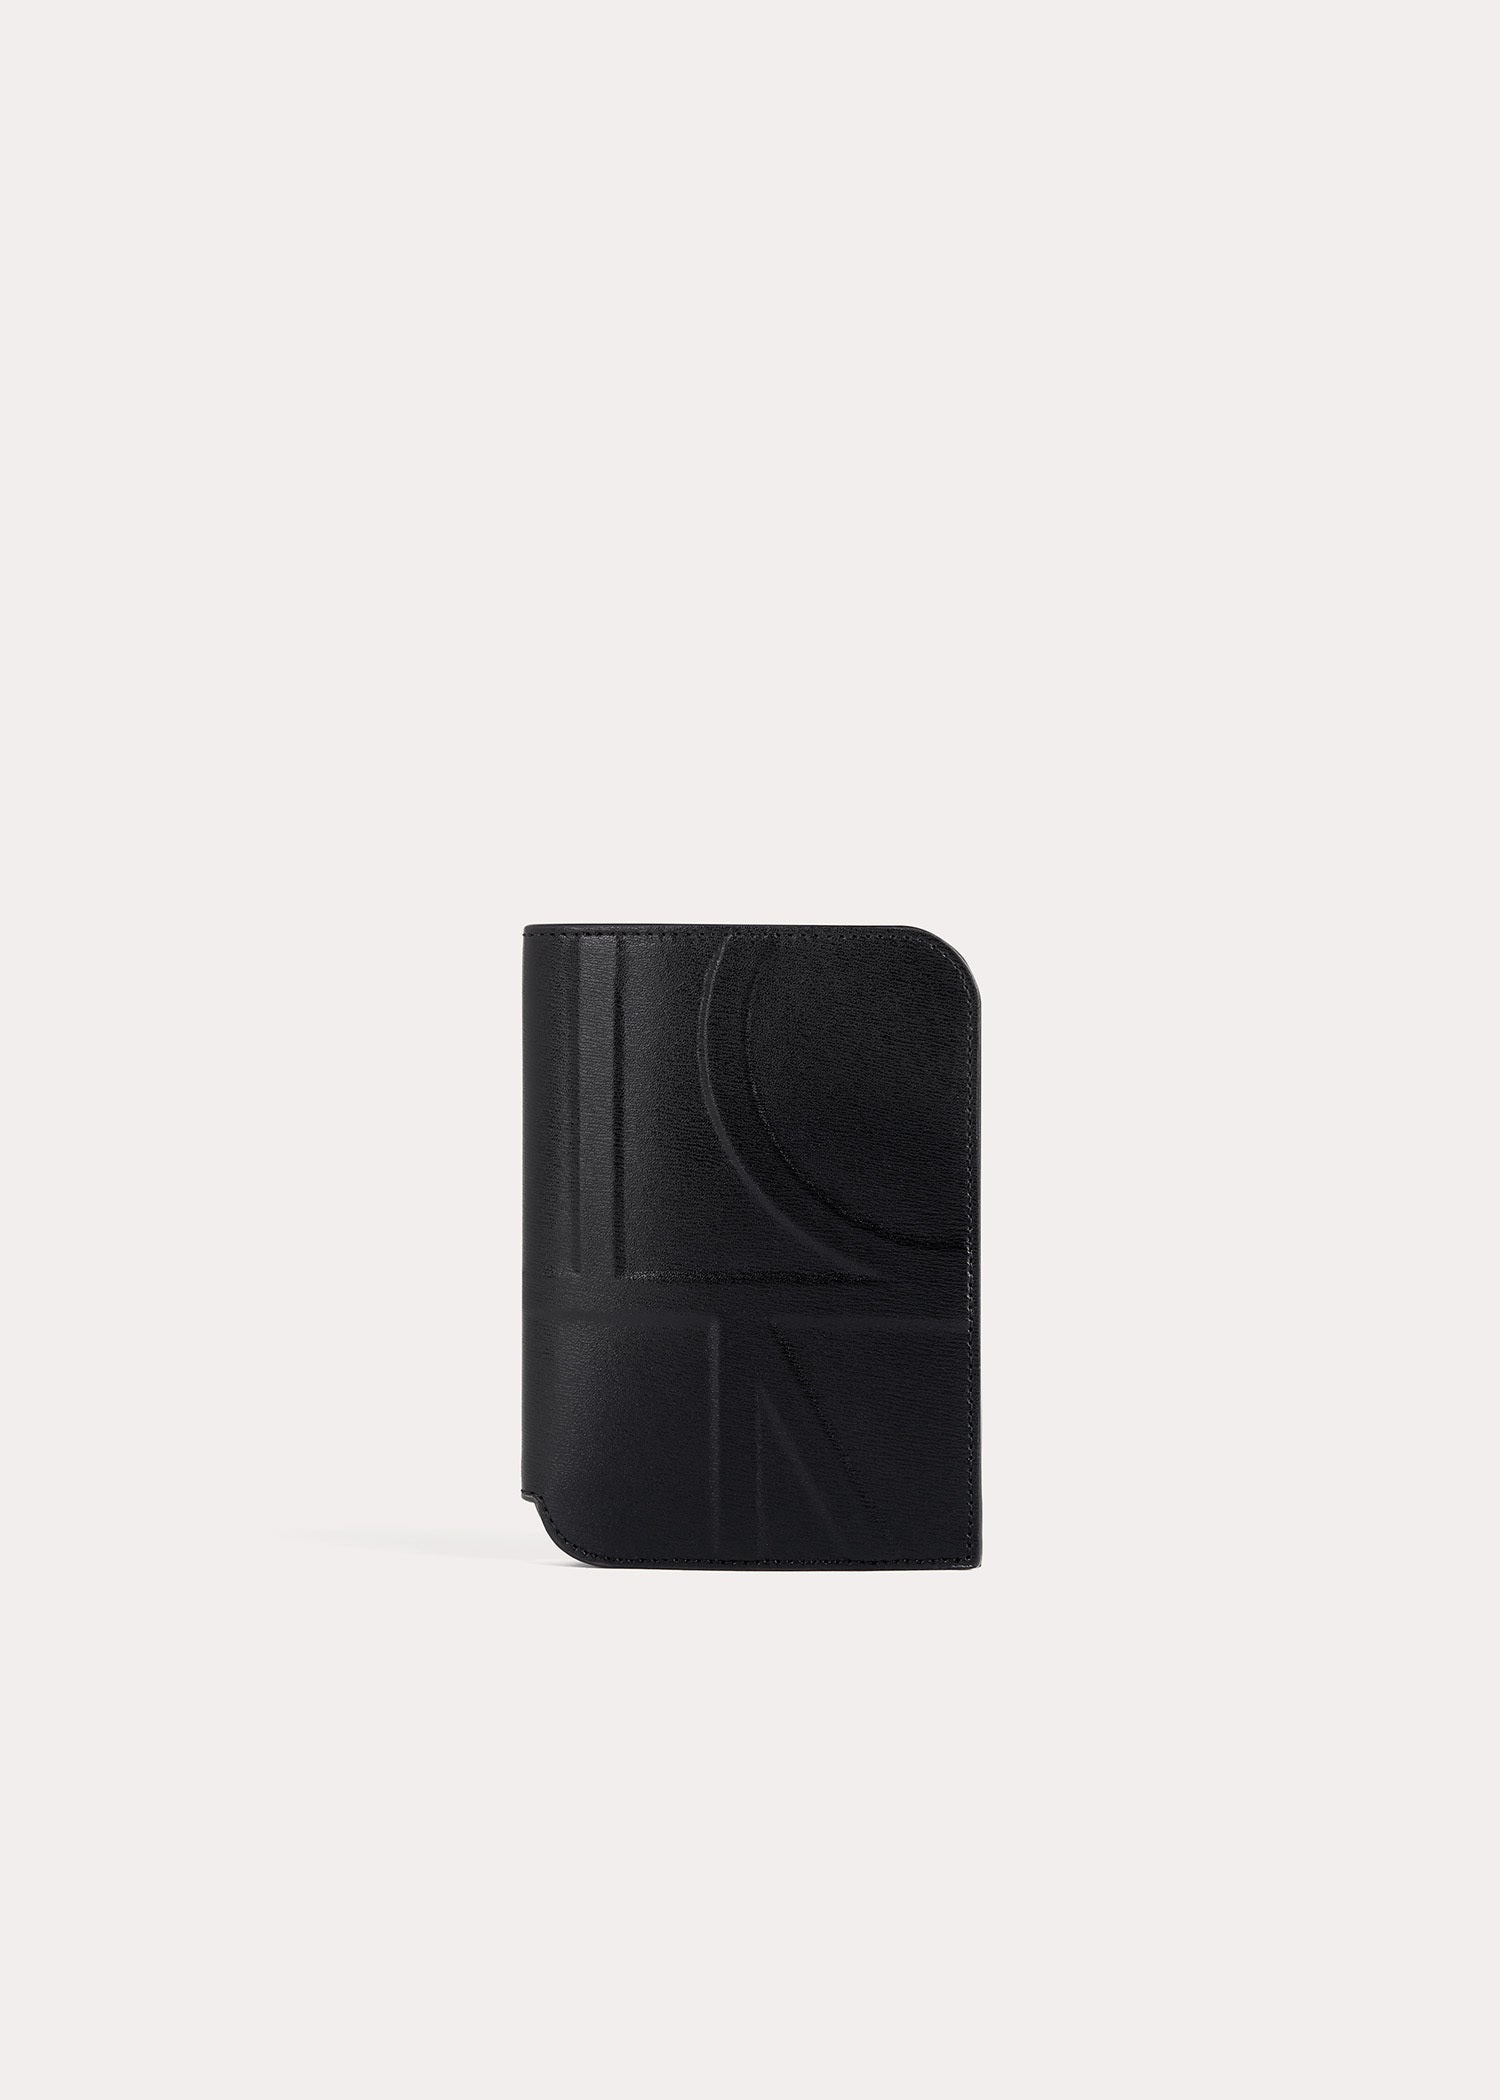 Monogram leather passport holder black - 1